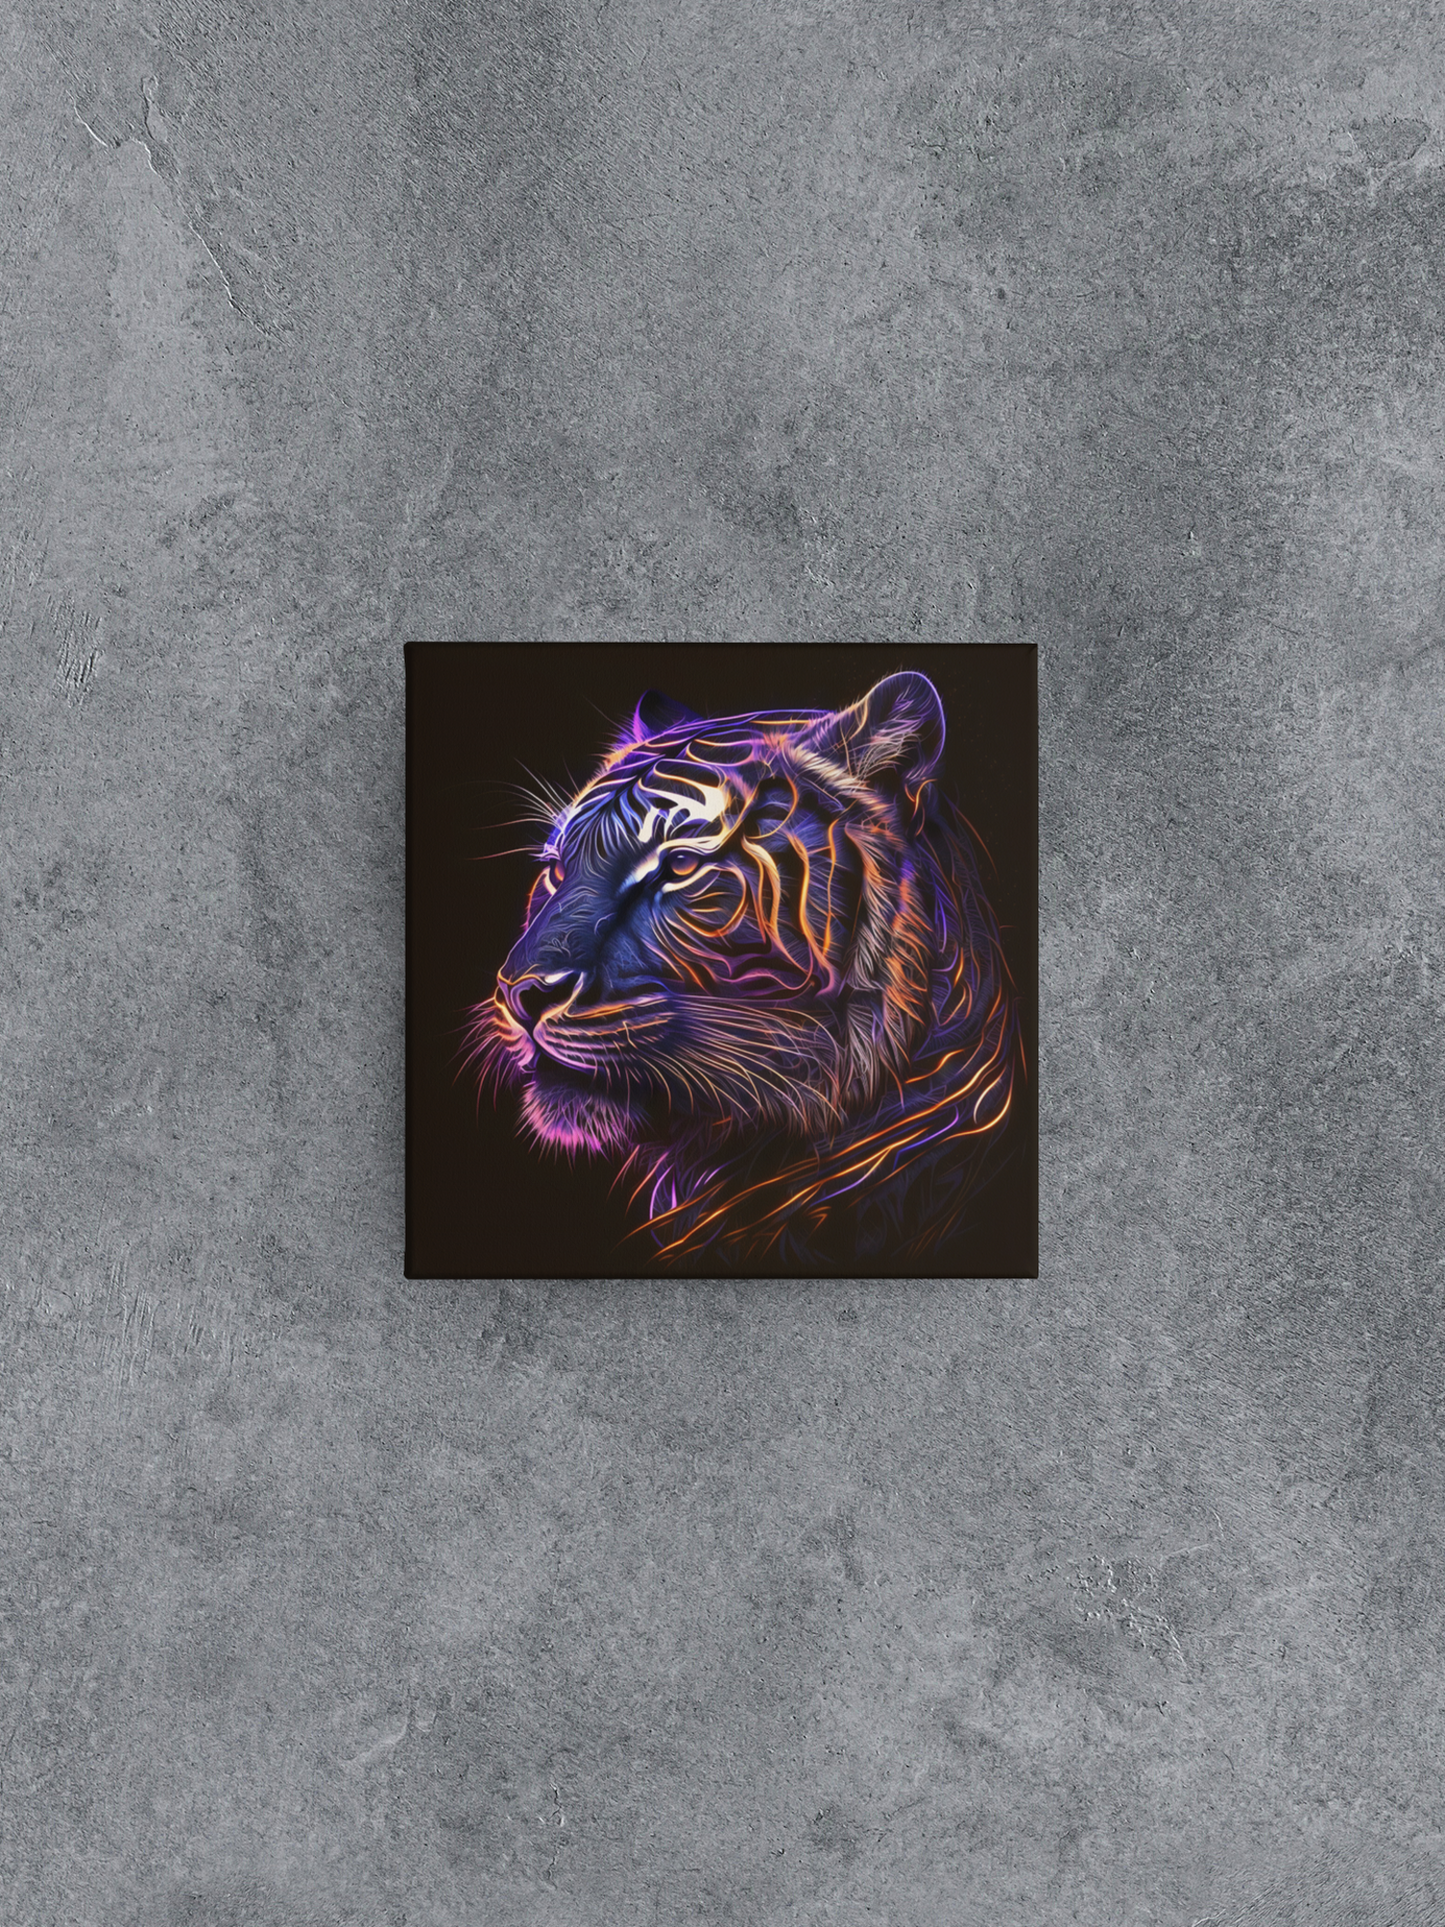 Black Light Tiger Canvas Wall Art, Neon Tiger Canvas Painting, Glowing Tiger Painting on Black Background, Colorful Tiger Canvas